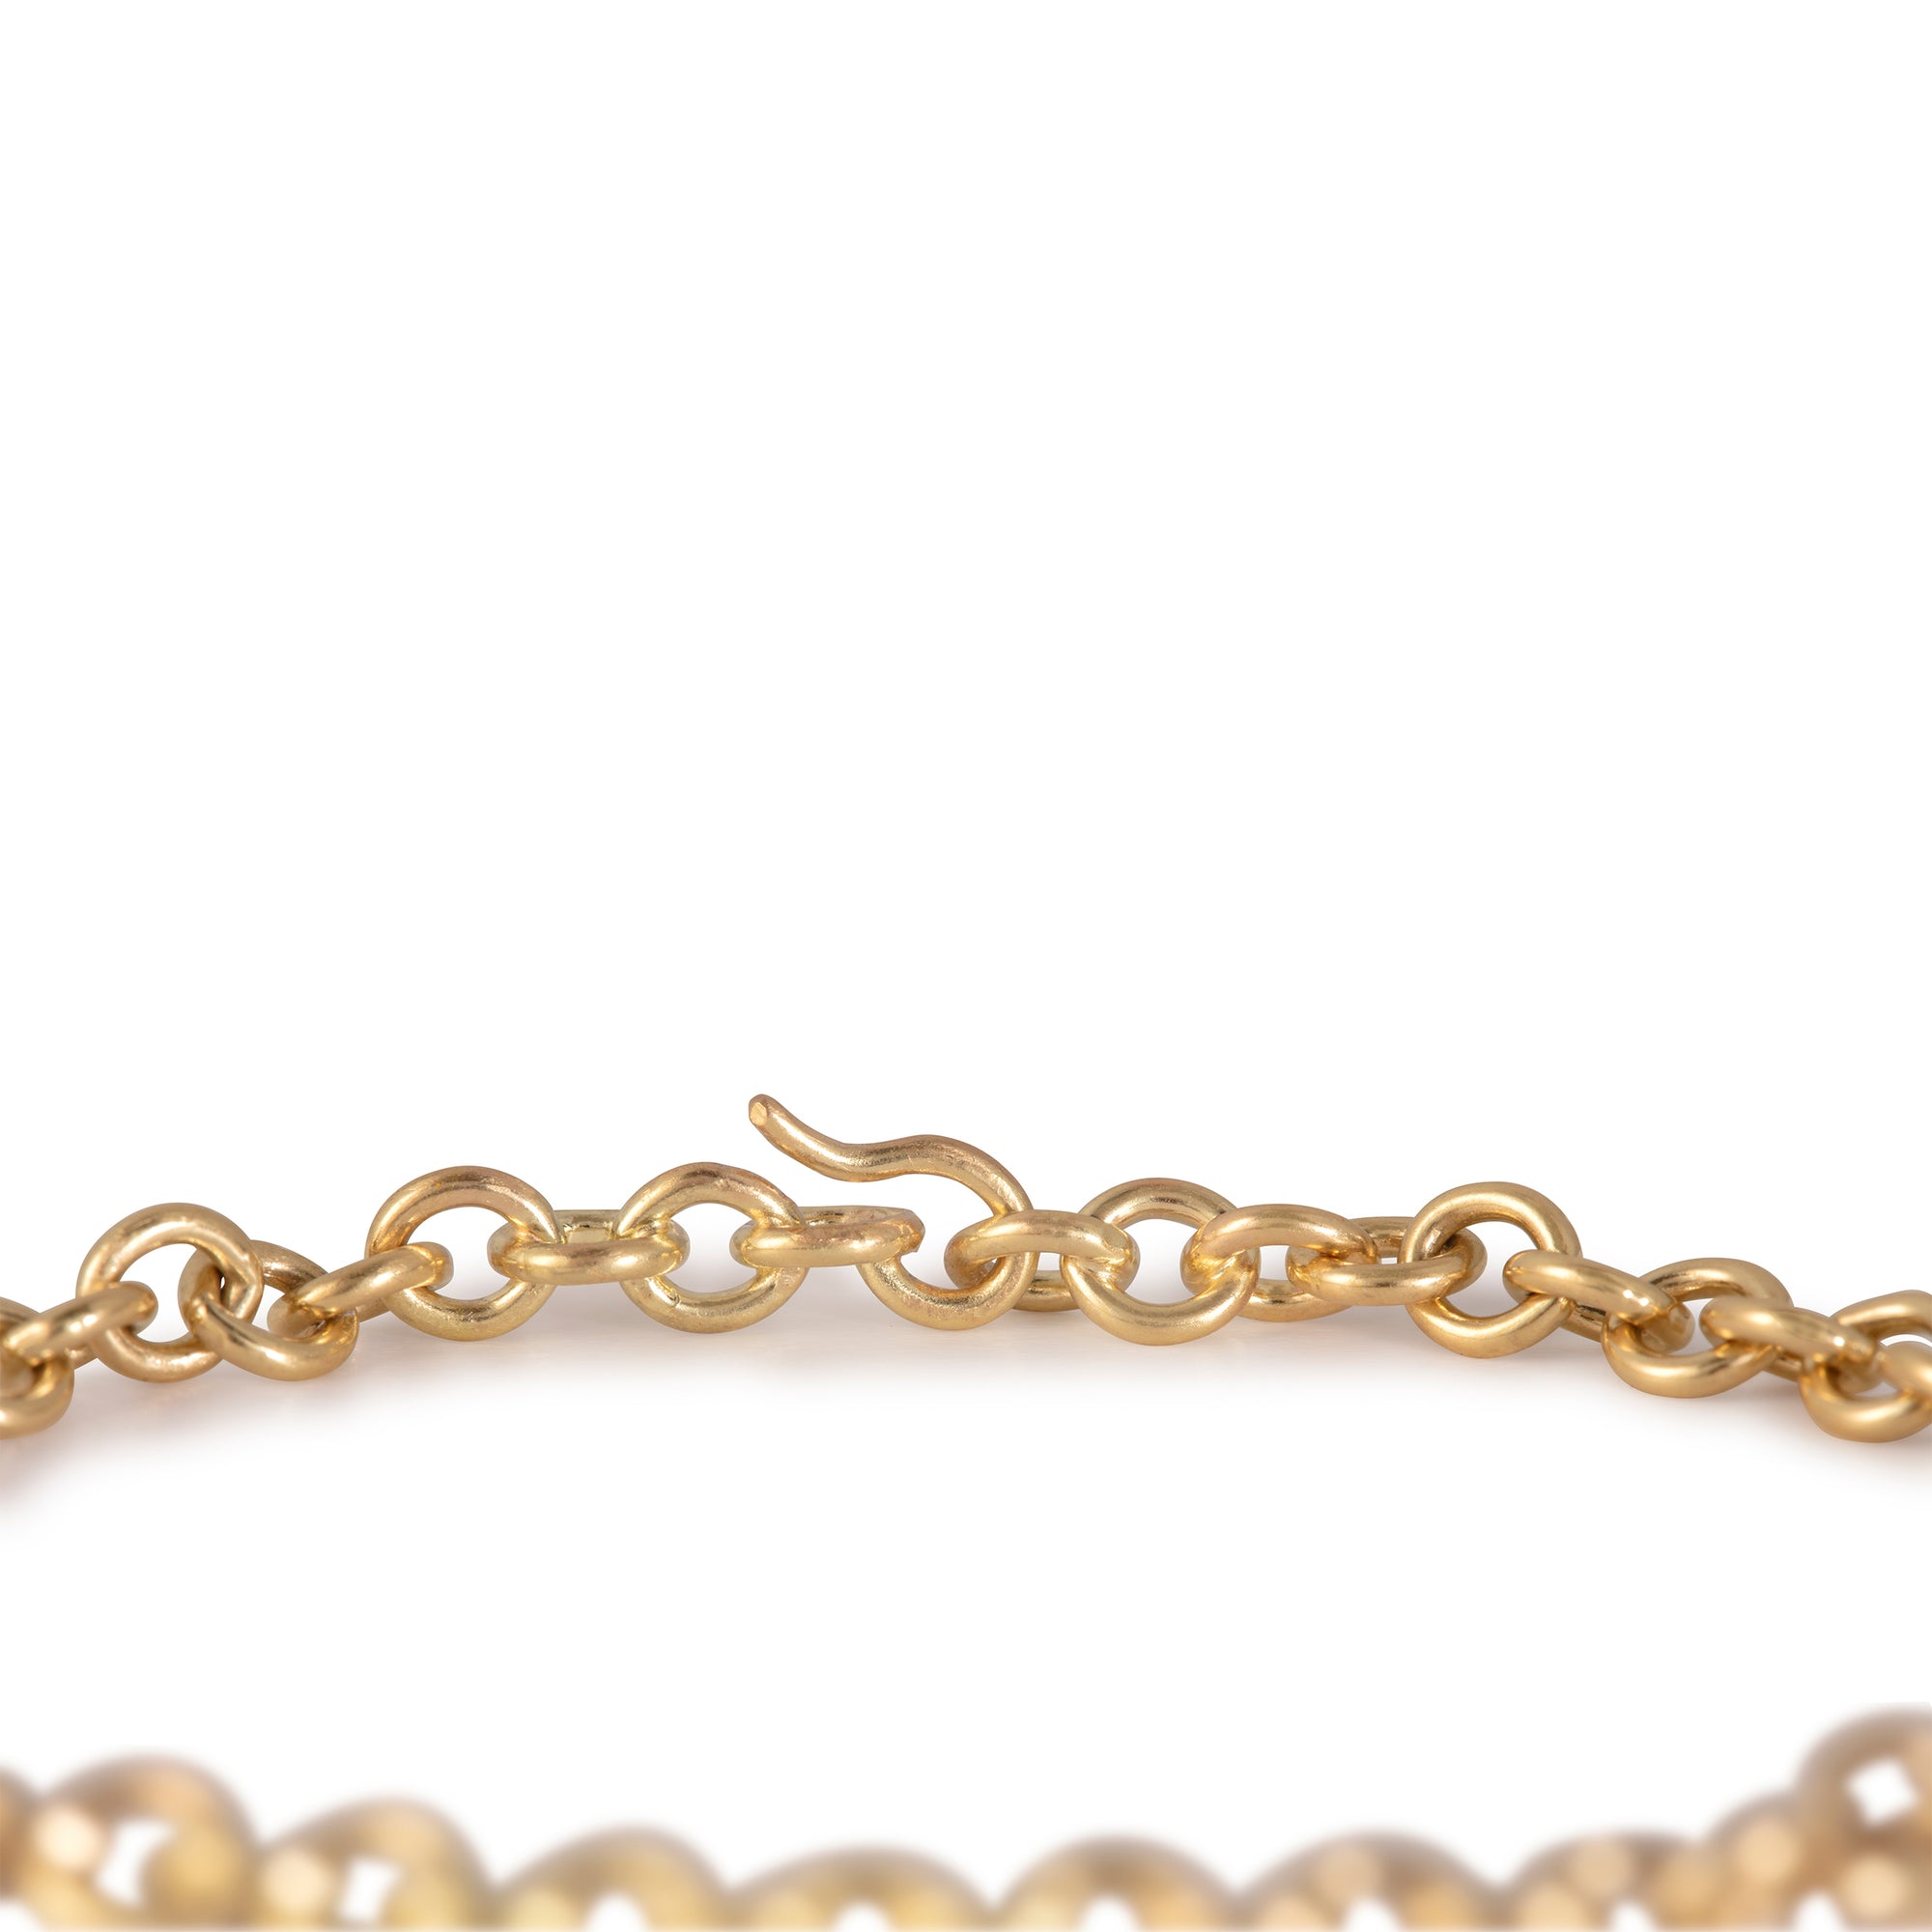    maya-selway-golden-thread-18ct-gold-bracelet-detail